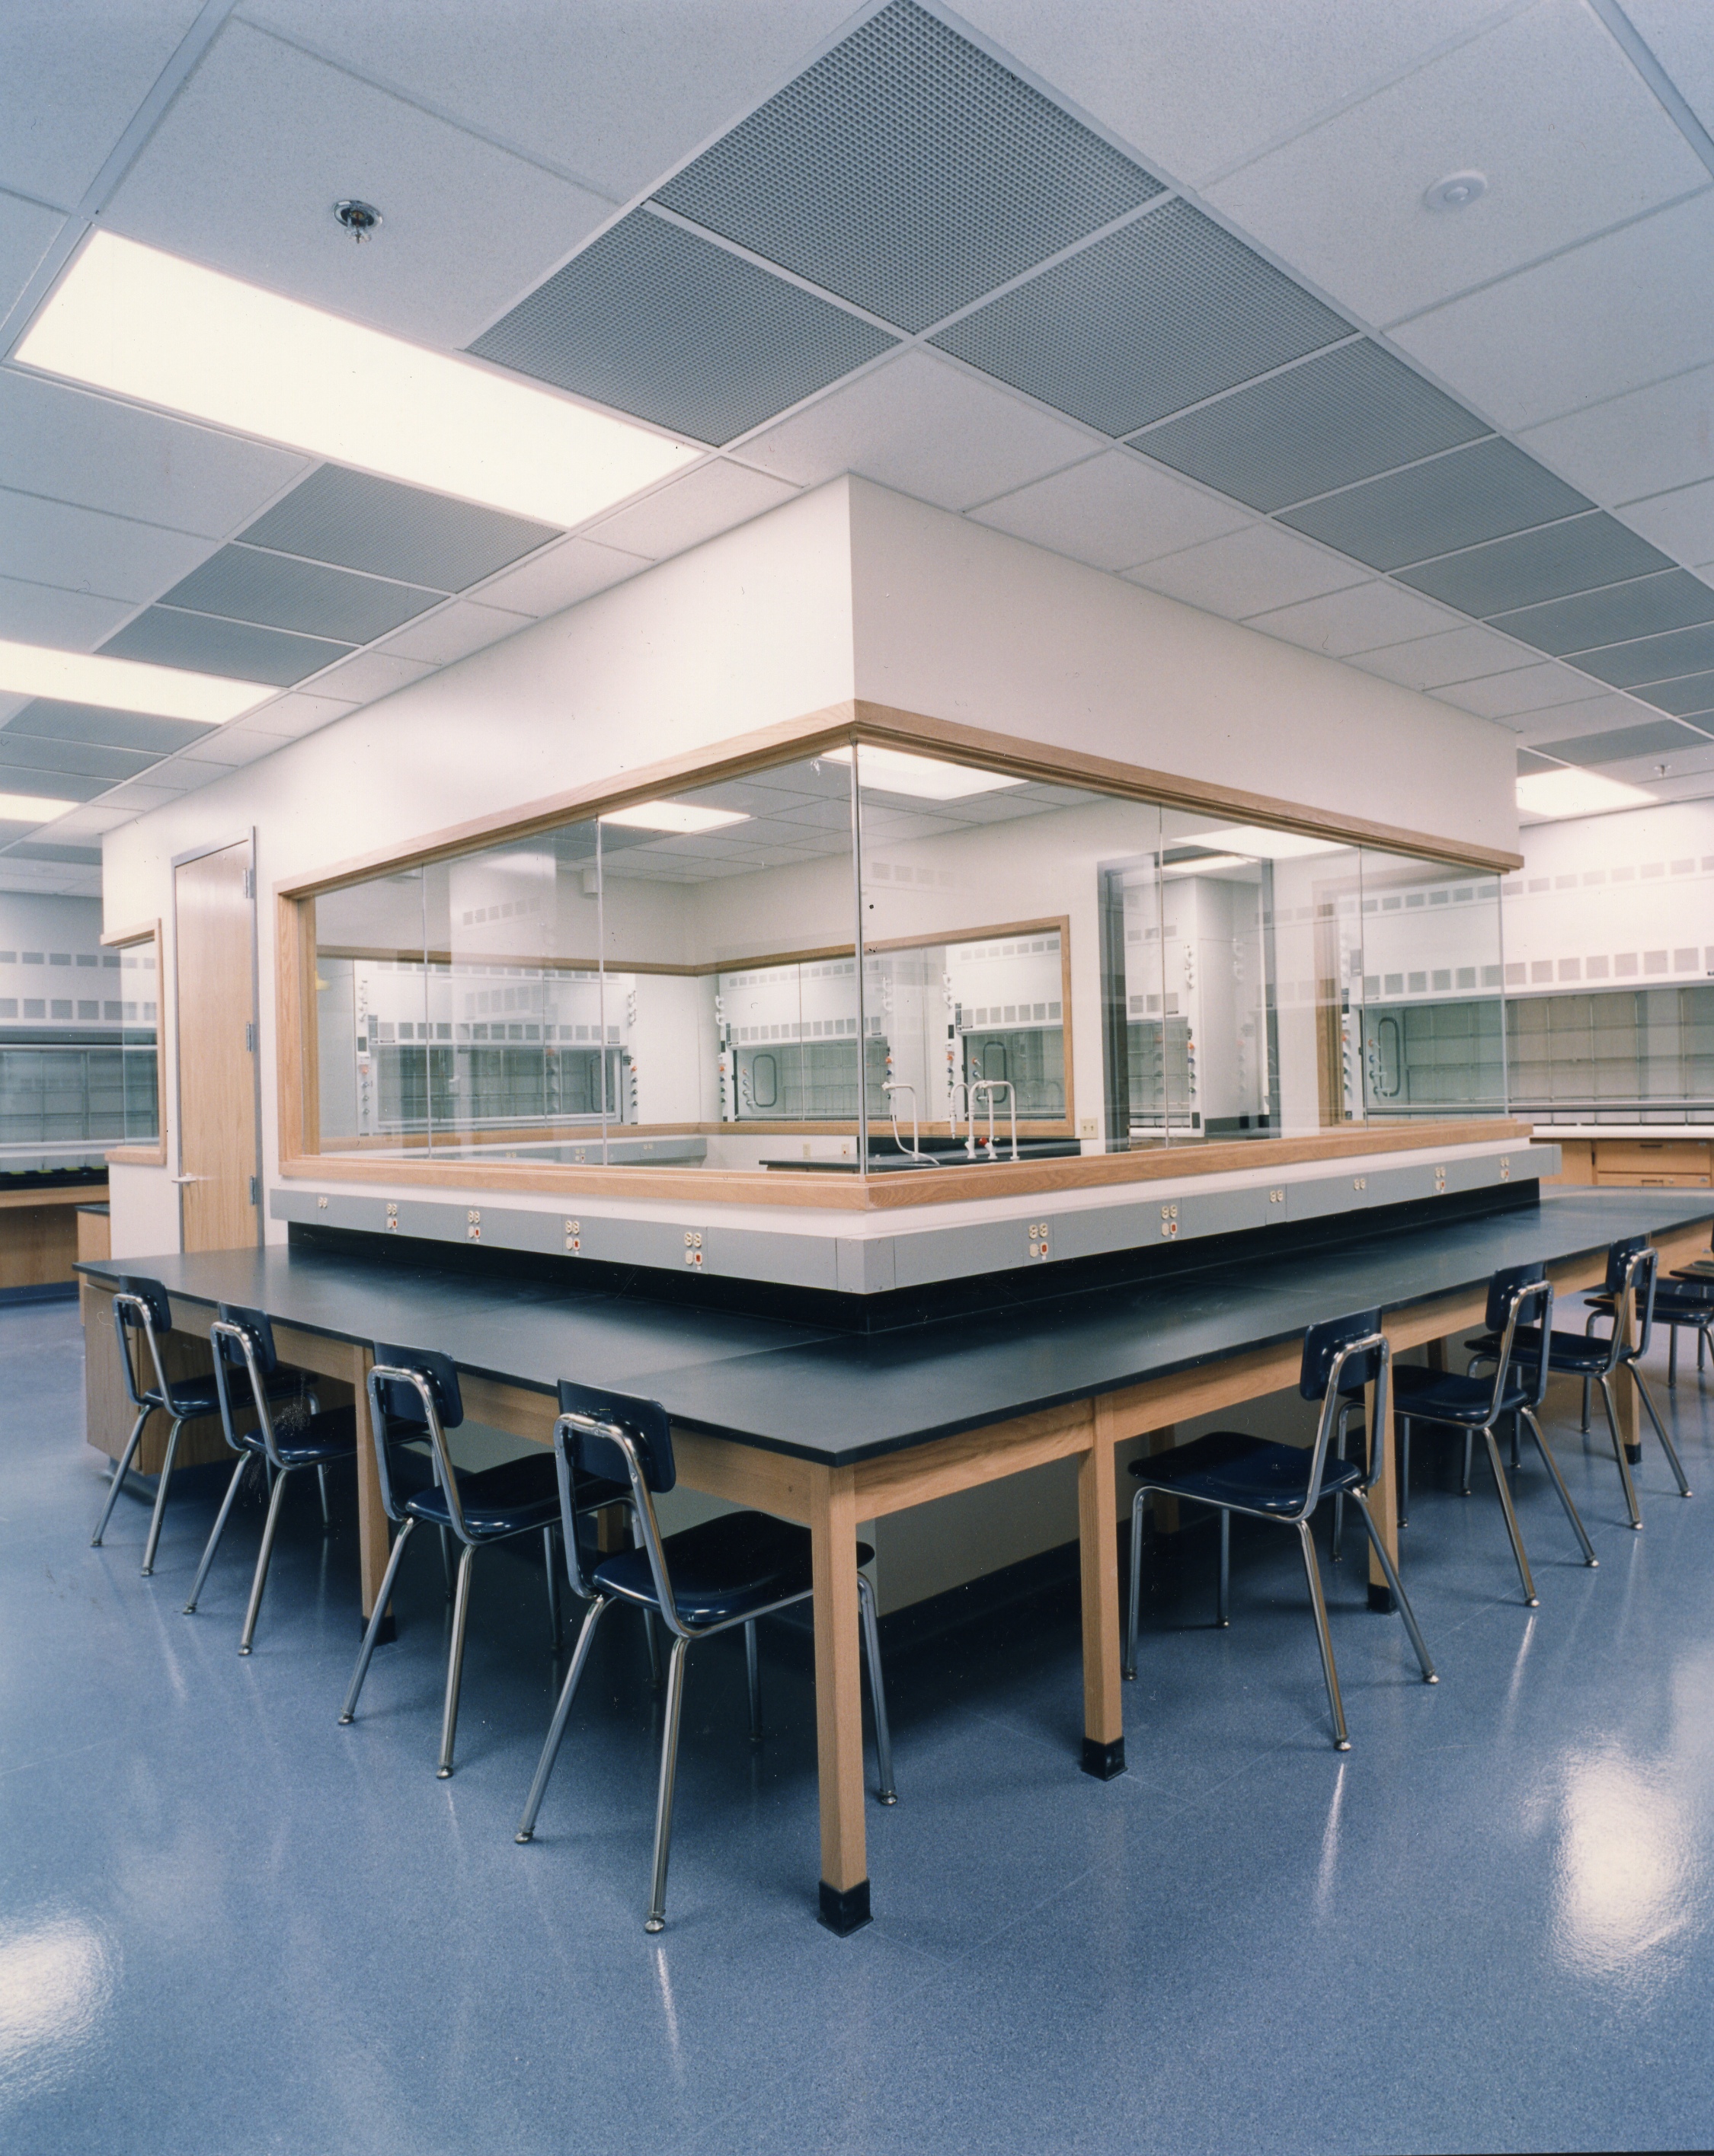 image of lab at Edgewood College